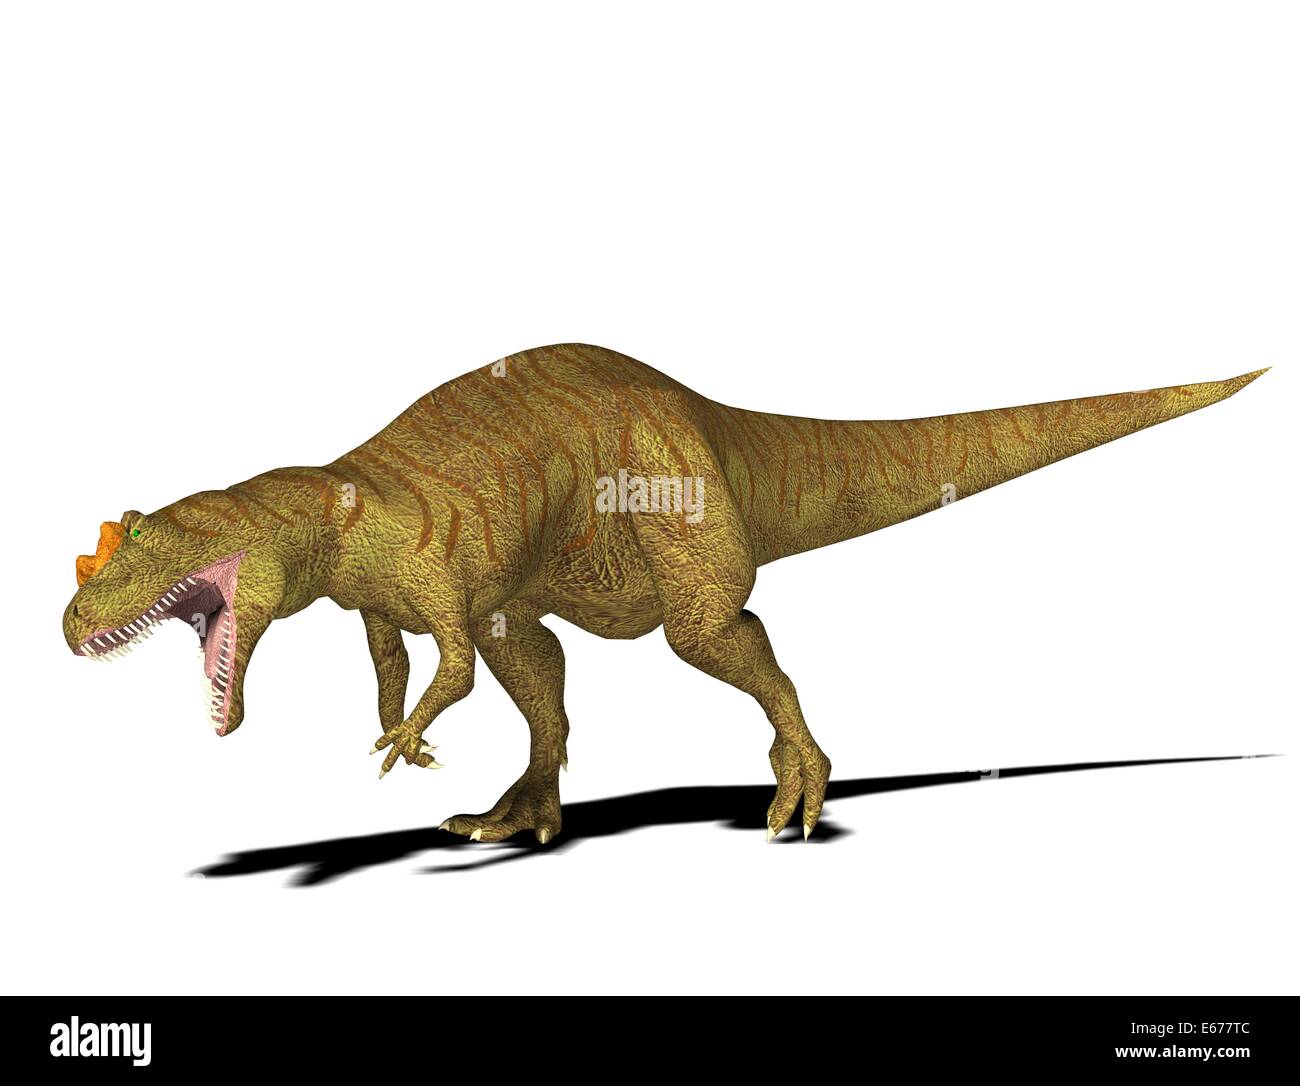 Dinosaurier Allosaurus / dinosaur Alioramus Stock Photo